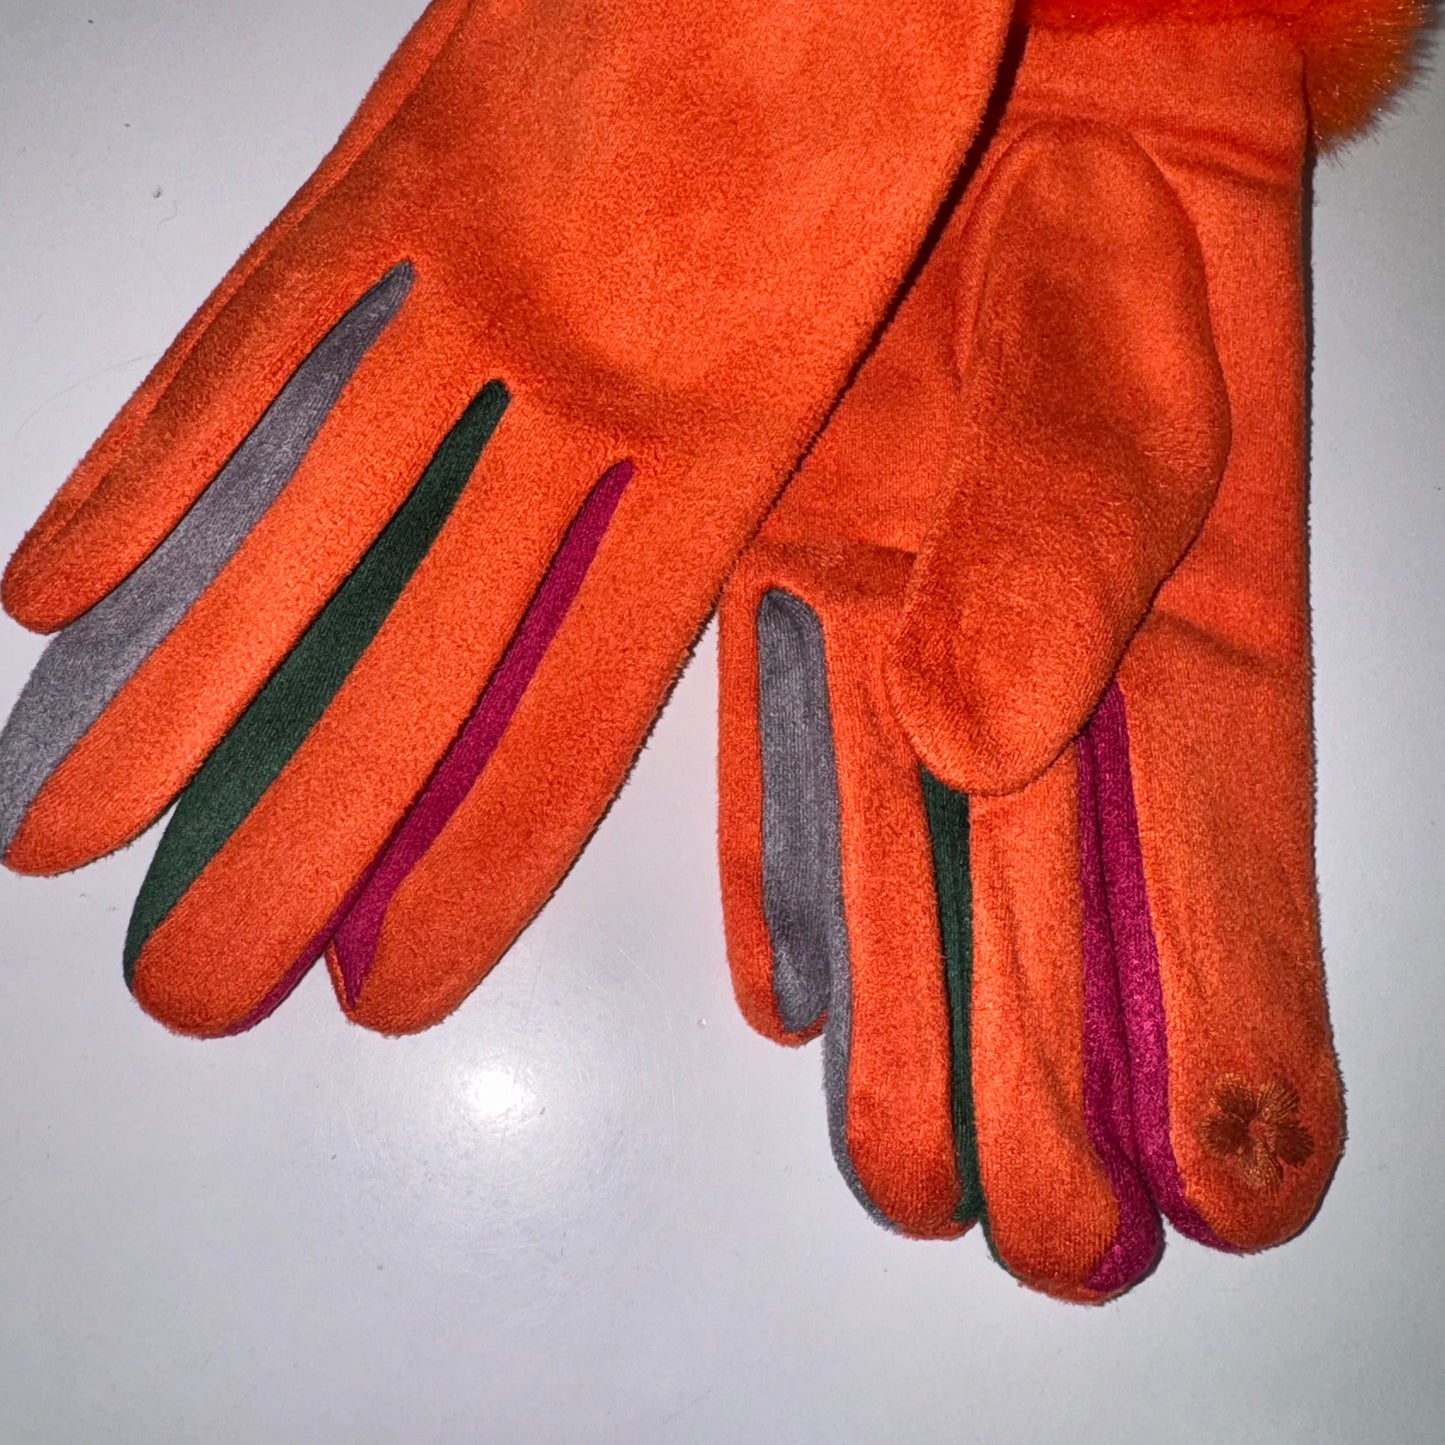 Eco Chic Fluffy Edge Gloves